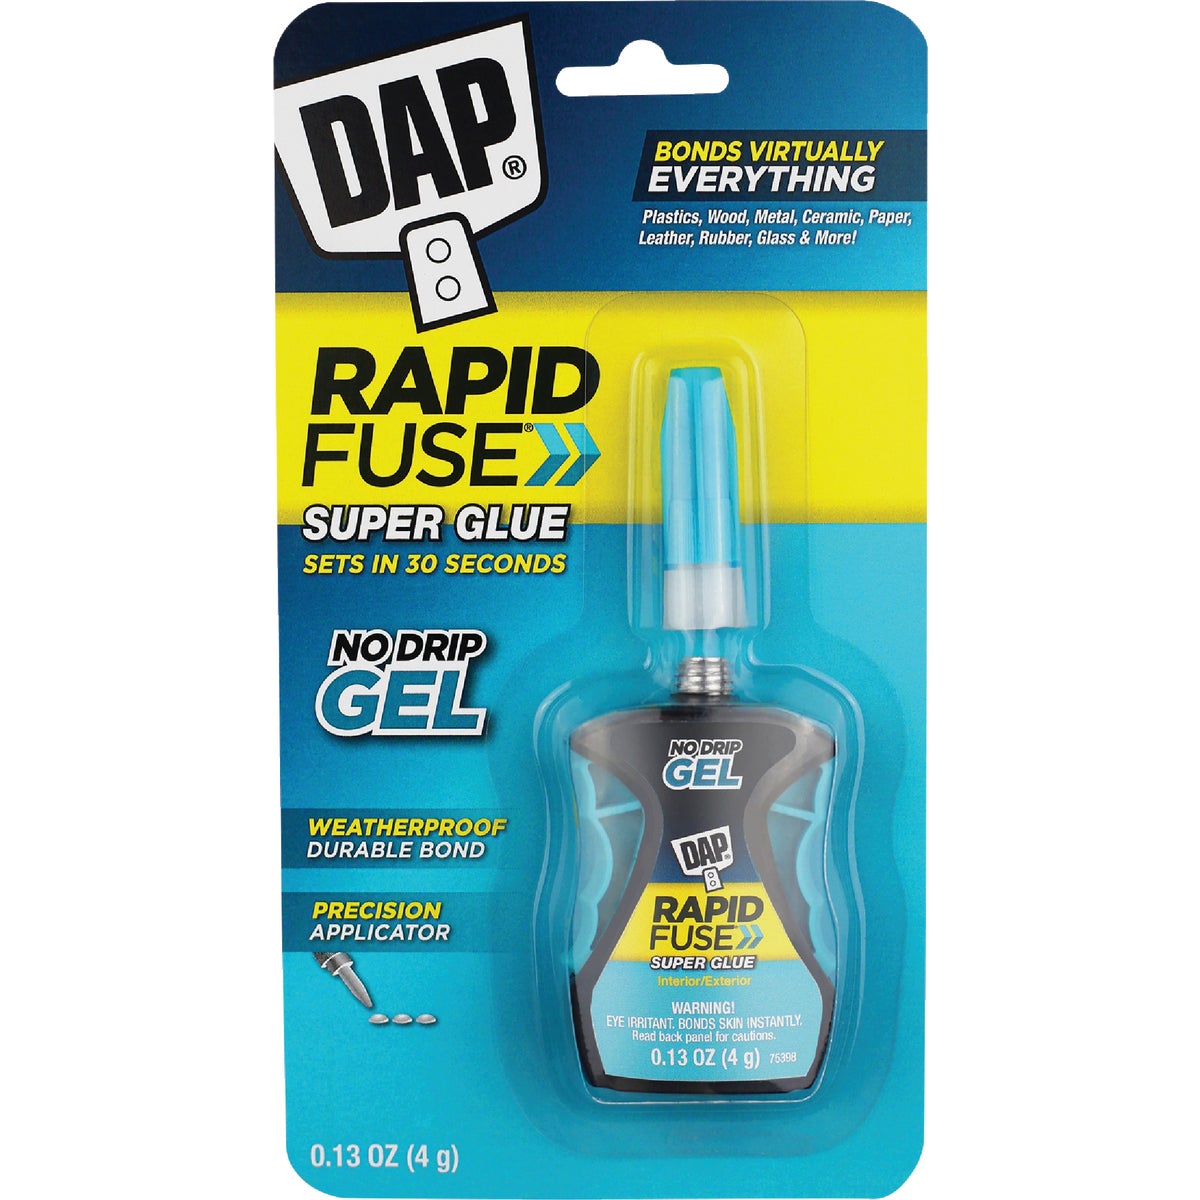 DAP RapidFuse 0.13 Oz. Clear Multi-Purpose Adhesive Gel with Gel Control Applicator